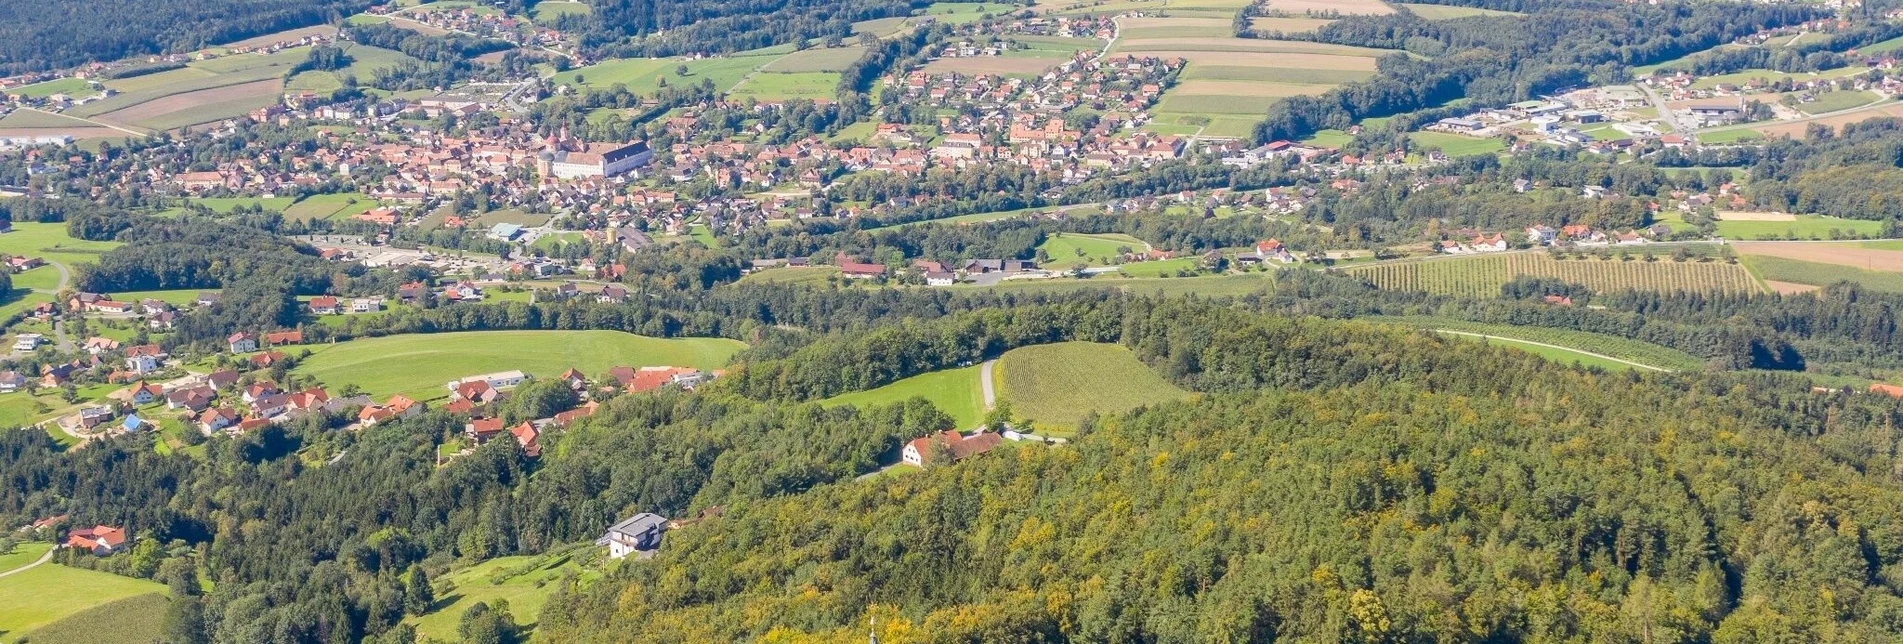 Landschaft: Wallfahrtskirche Pöllauberg und Blick ins Tal | © Tourismusverband Naturpark Pöllauer Tal